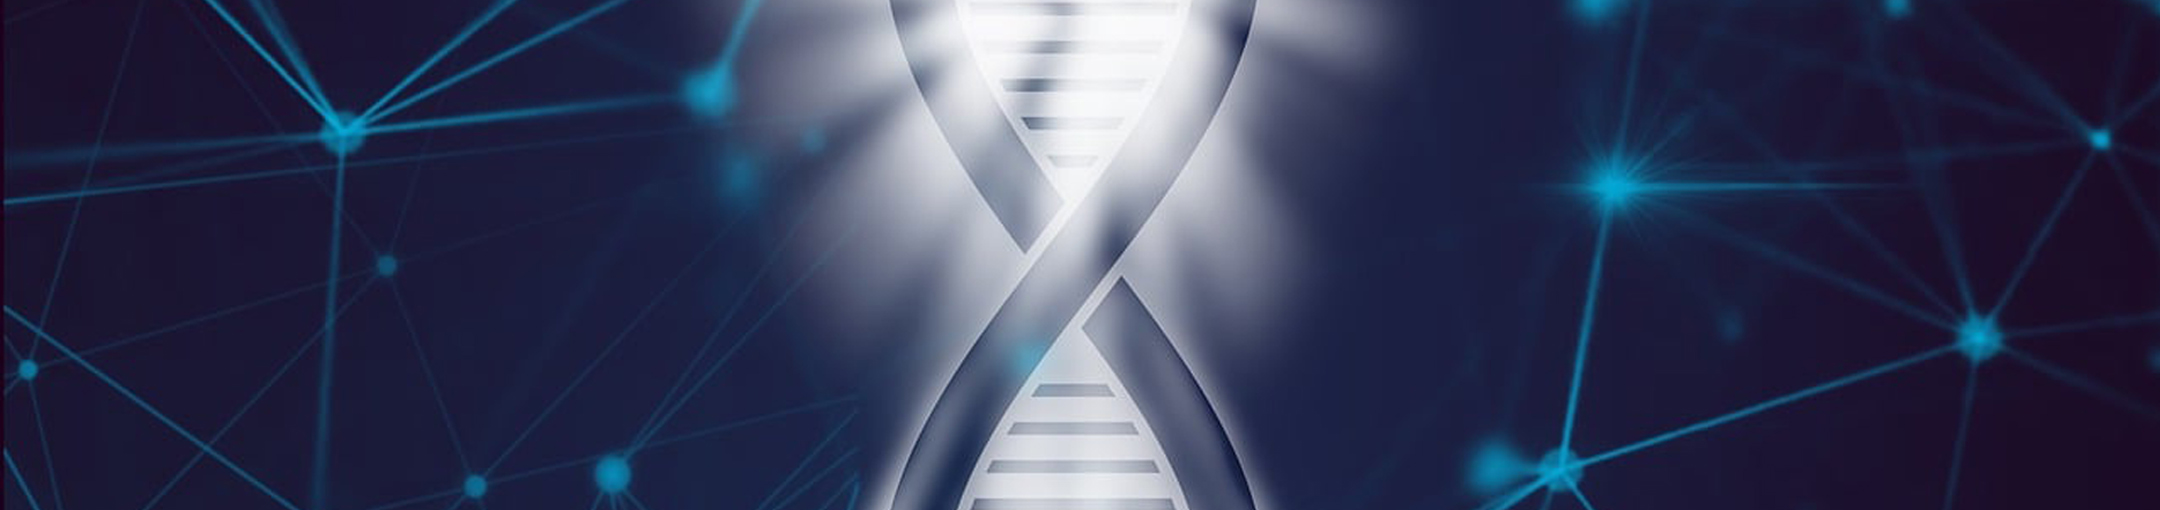 genomics symbol